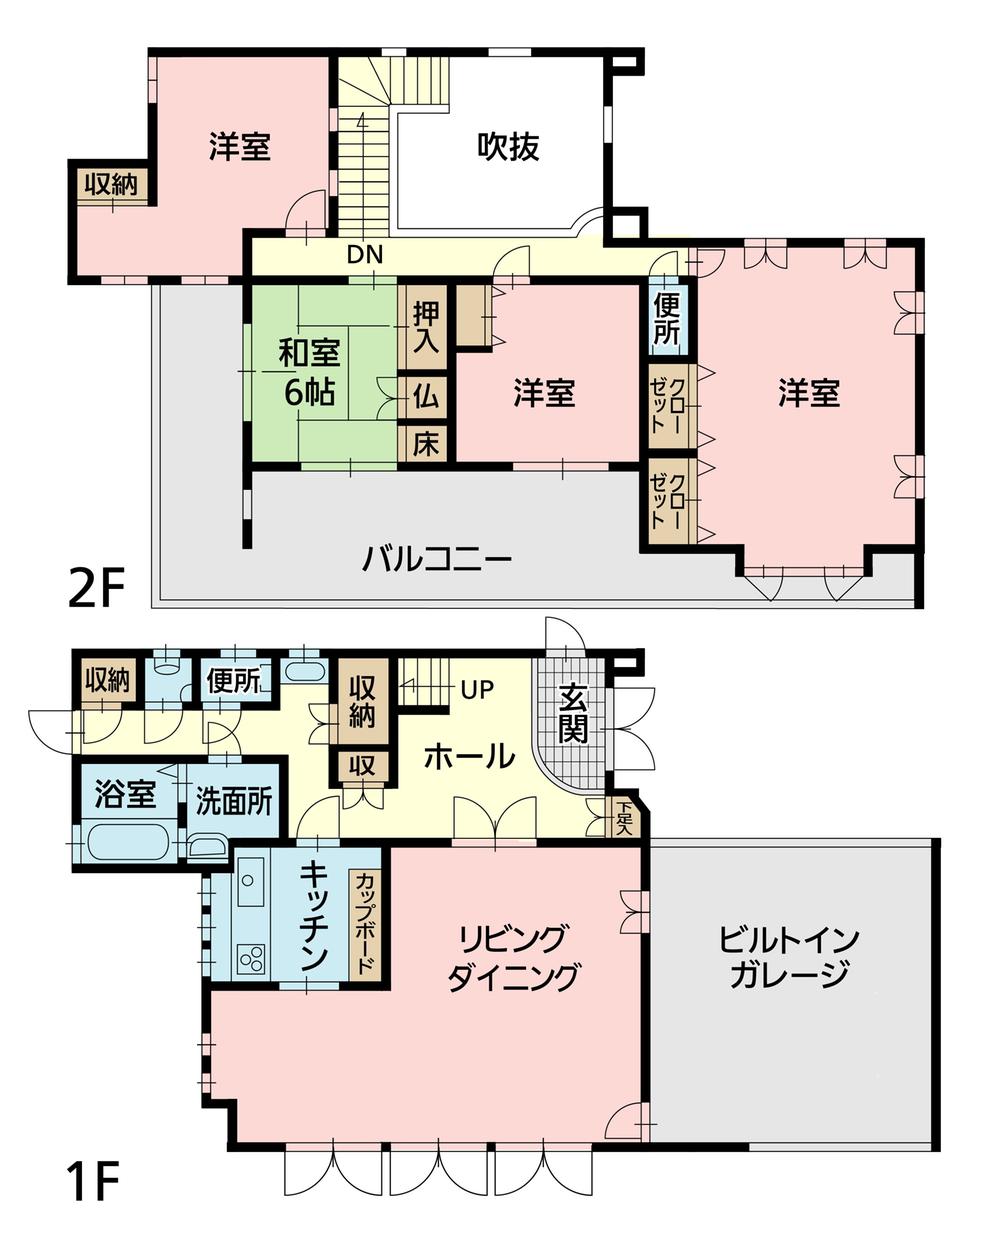 Floor plan. 48,810,000 yen, 4LDK, Land area 882.68 sq m , Building area 882.68 sq m